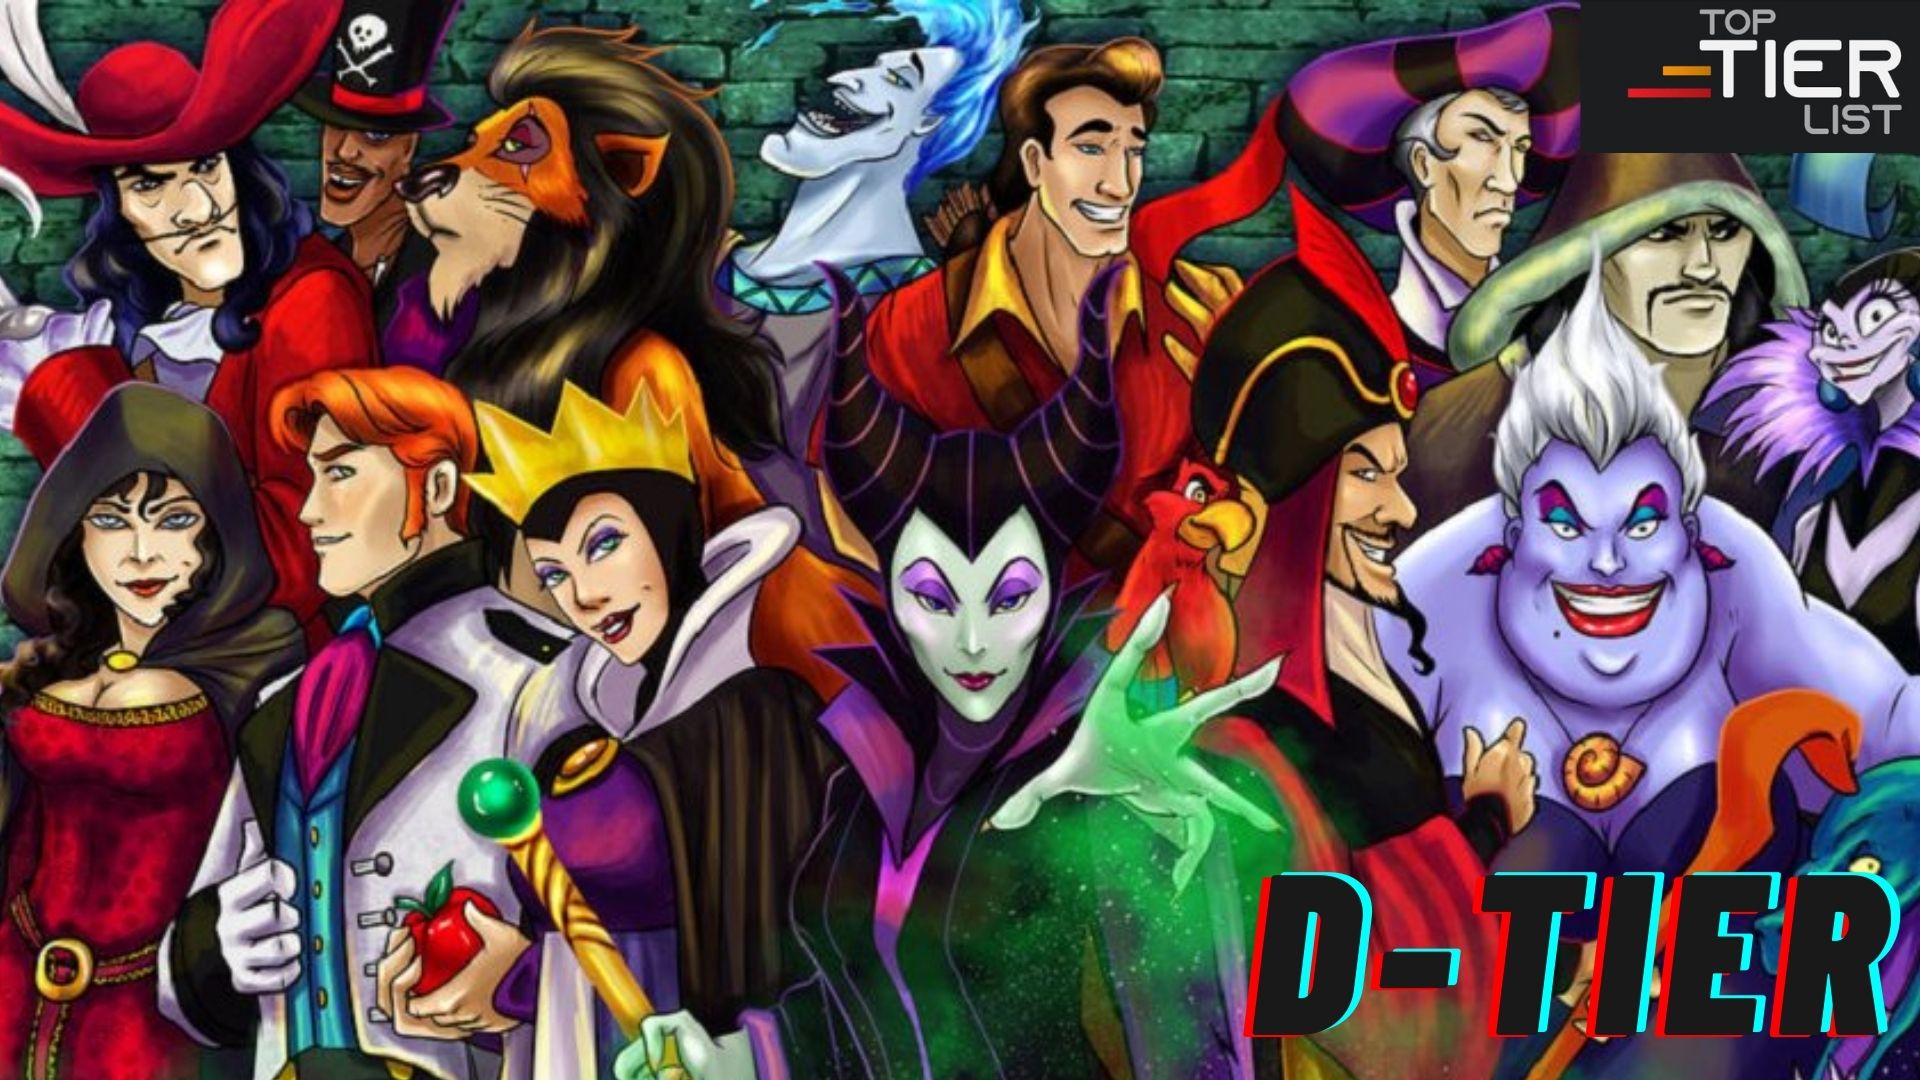 Villains from Disney Entertainment